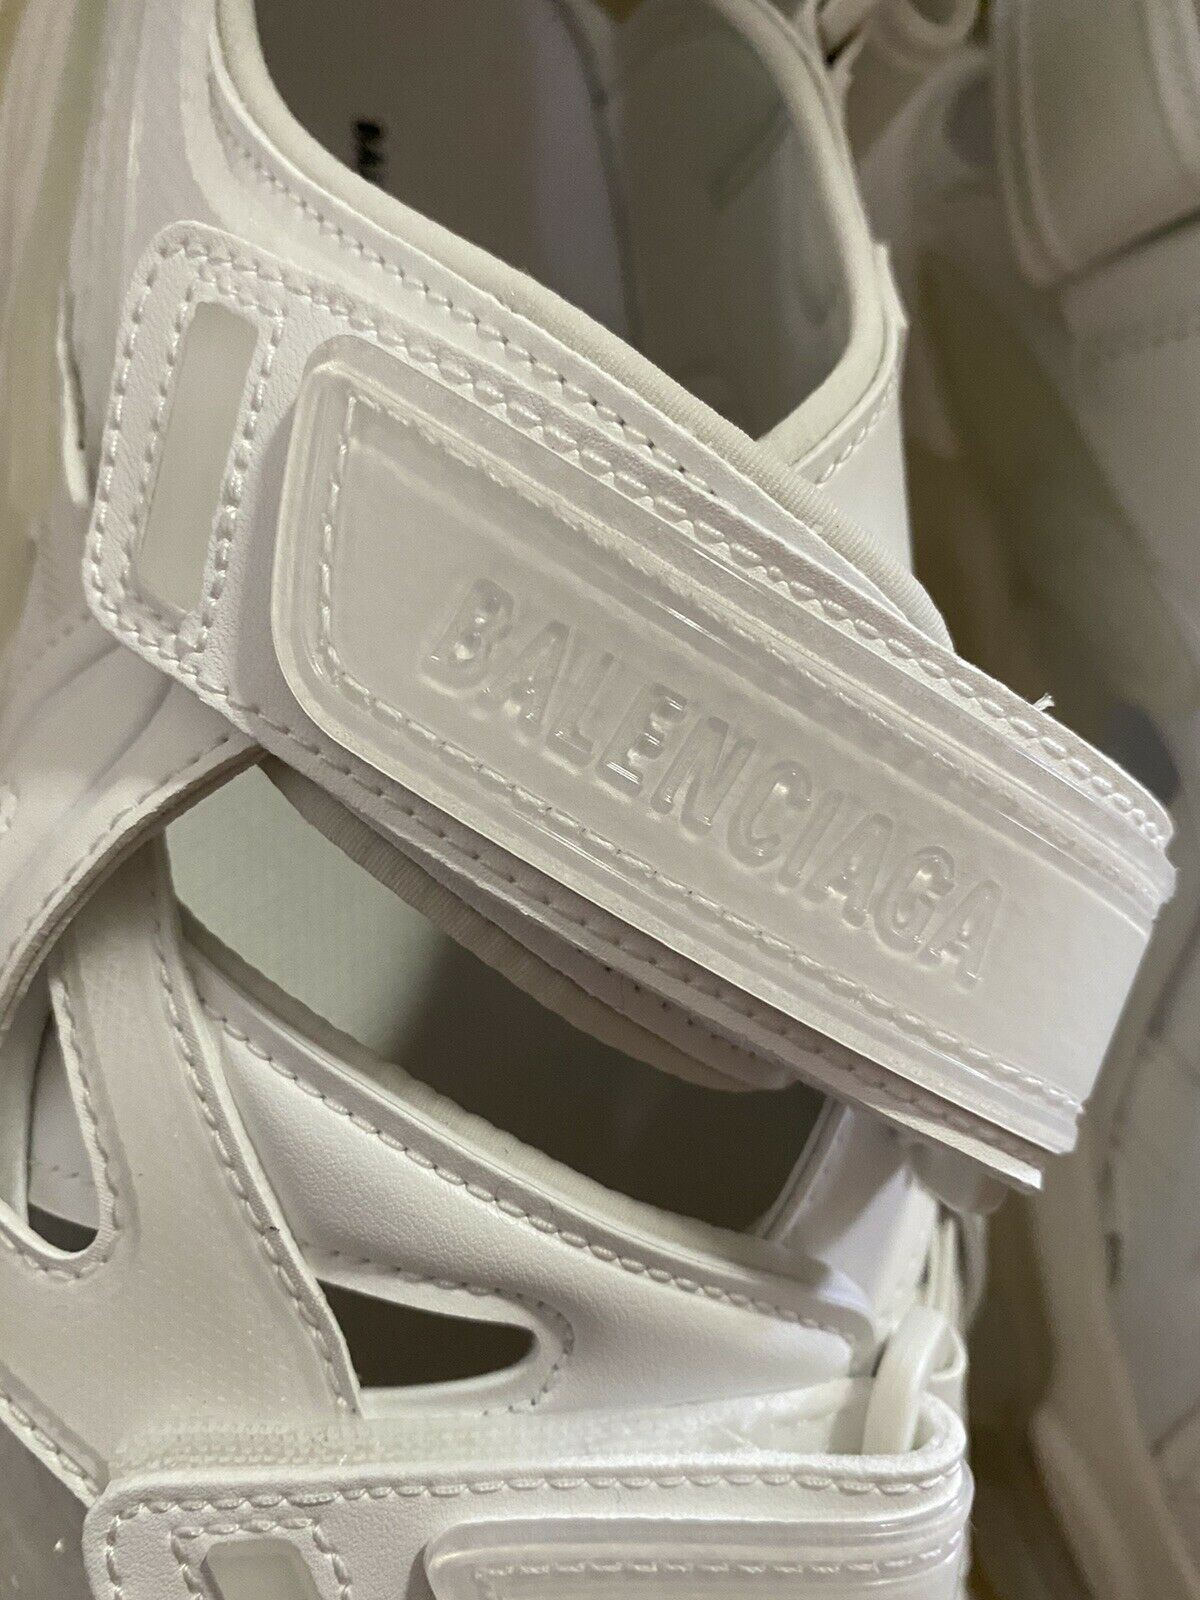 NIB Balenciaga Mens Track Sandal Shoes Screen White 11 US ( 44 Eu )